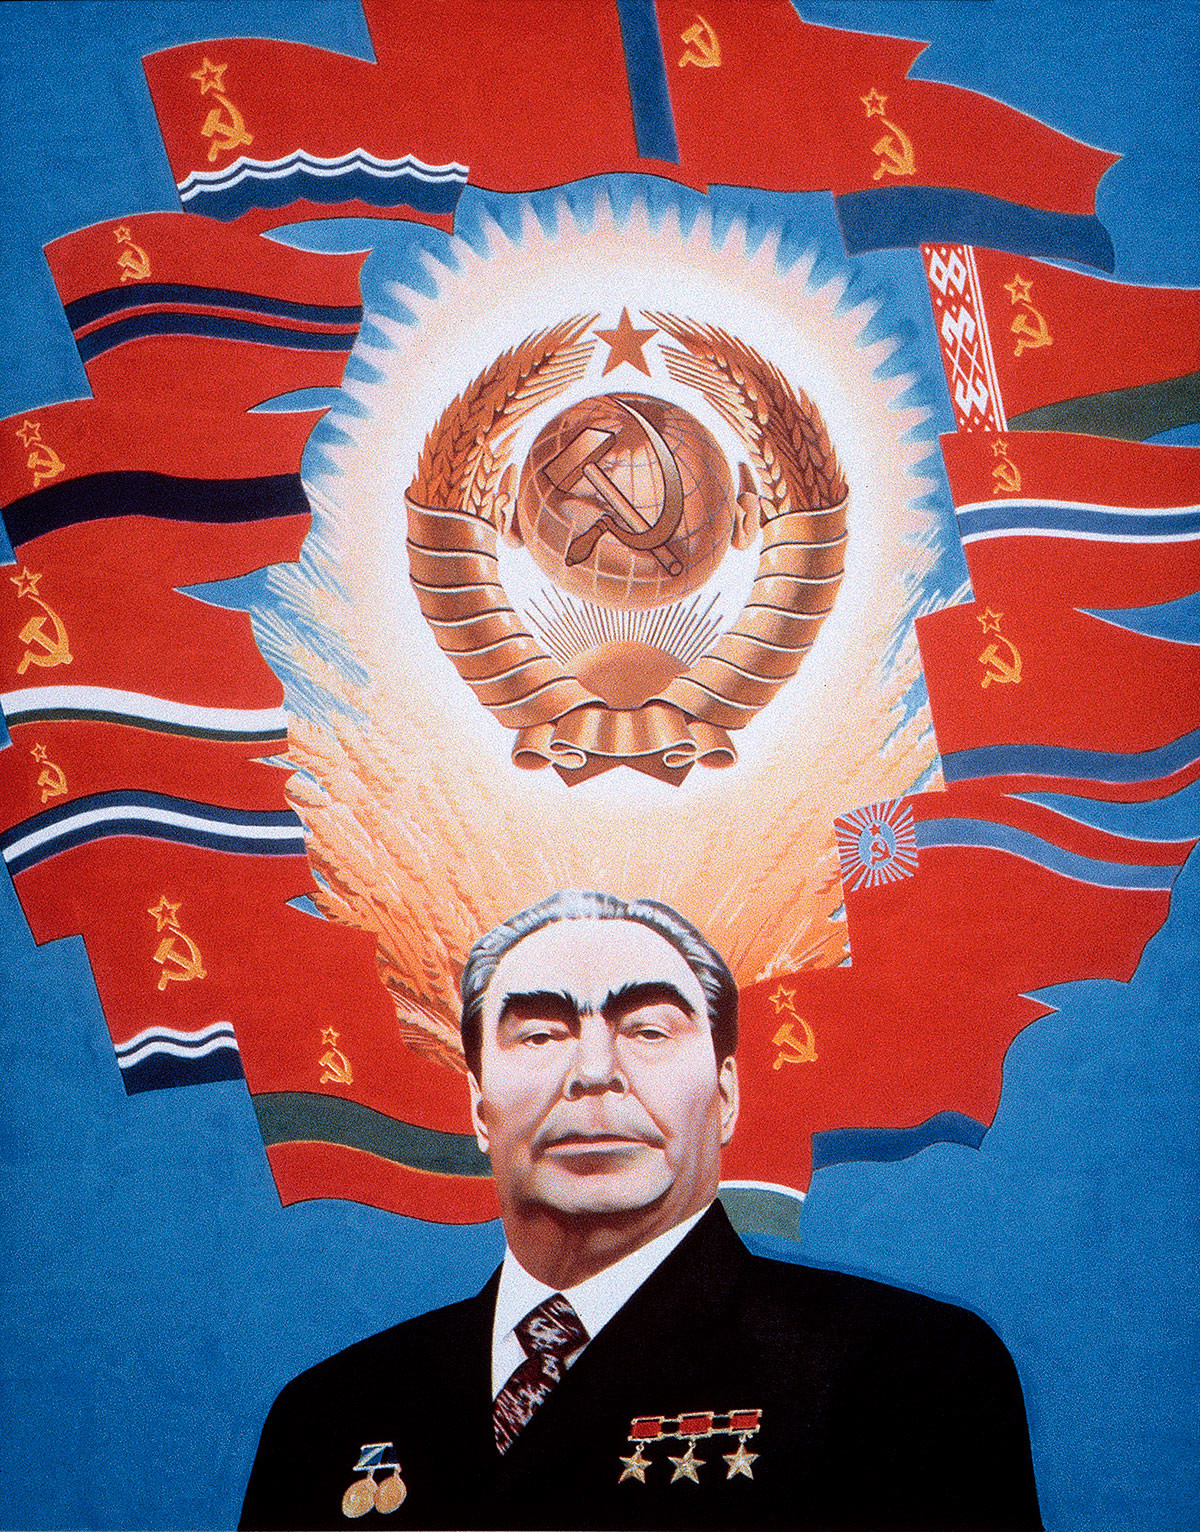 Eric Bulatov. Brezhnev. Ruang Angkasa Soviet, 1977.